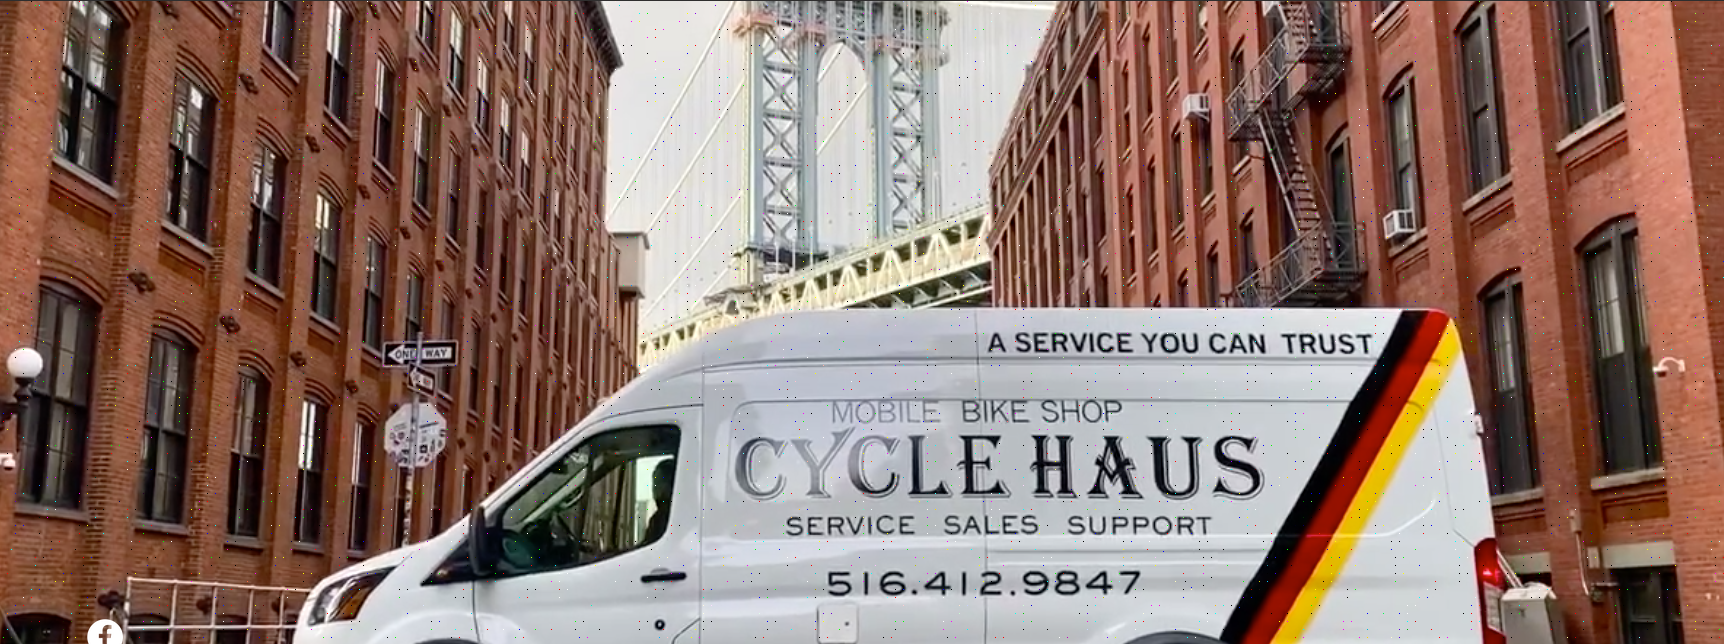 Cycle Haus – Mobile Bike shop